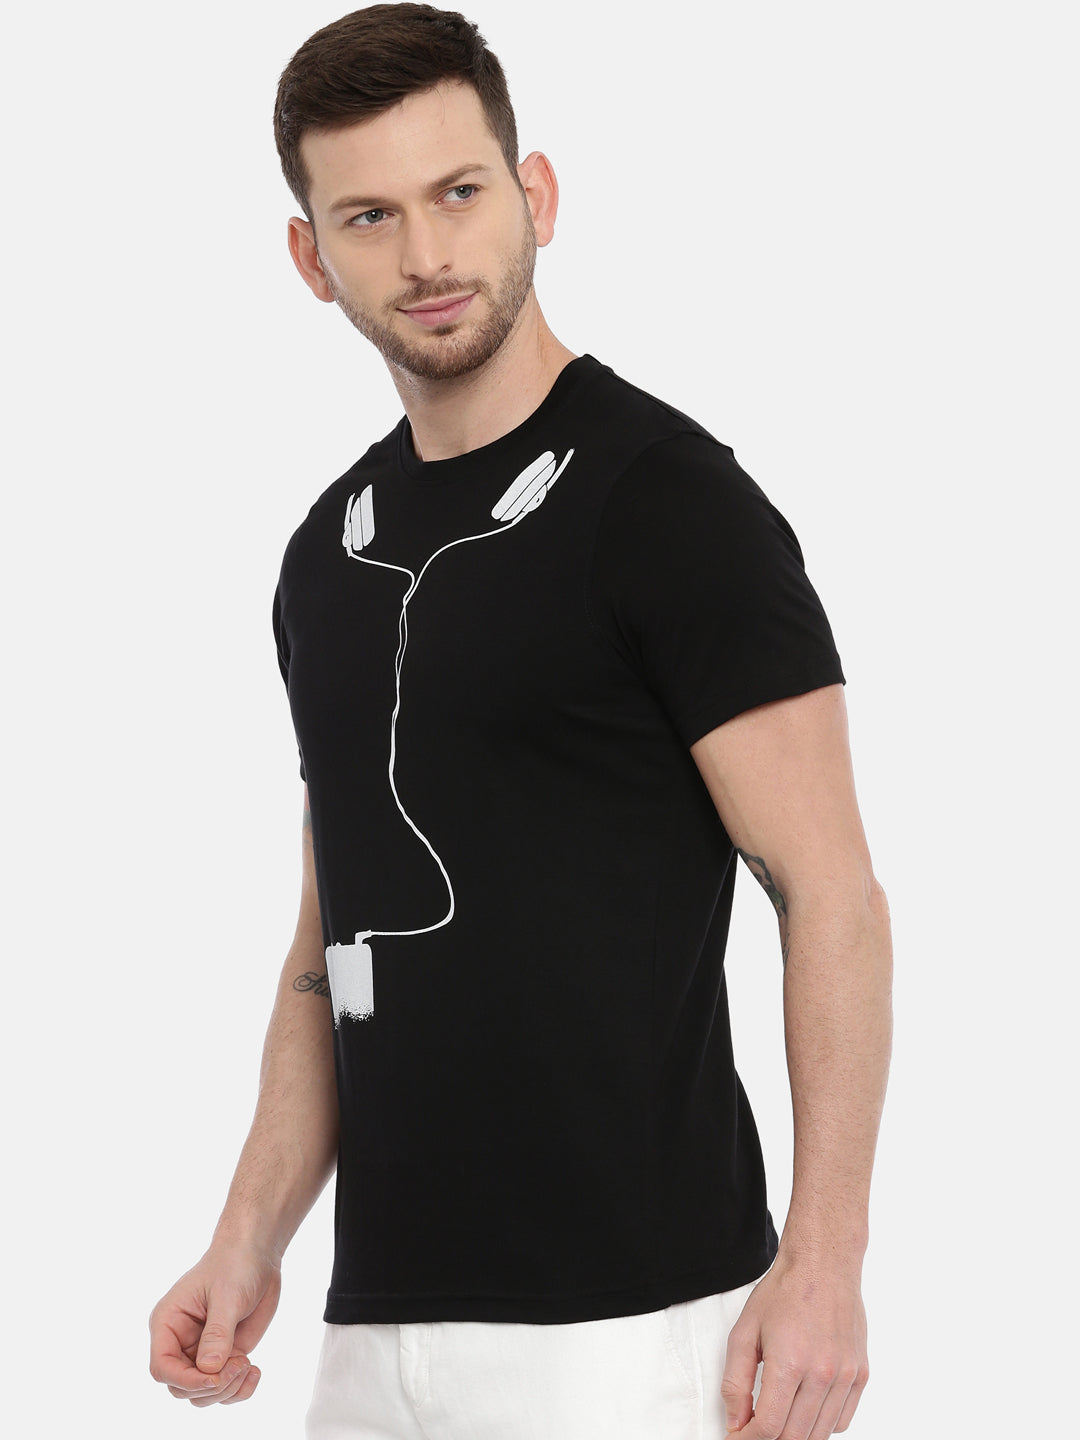 Headphone T-Shirt Graphic T-Shirts Bushirt   